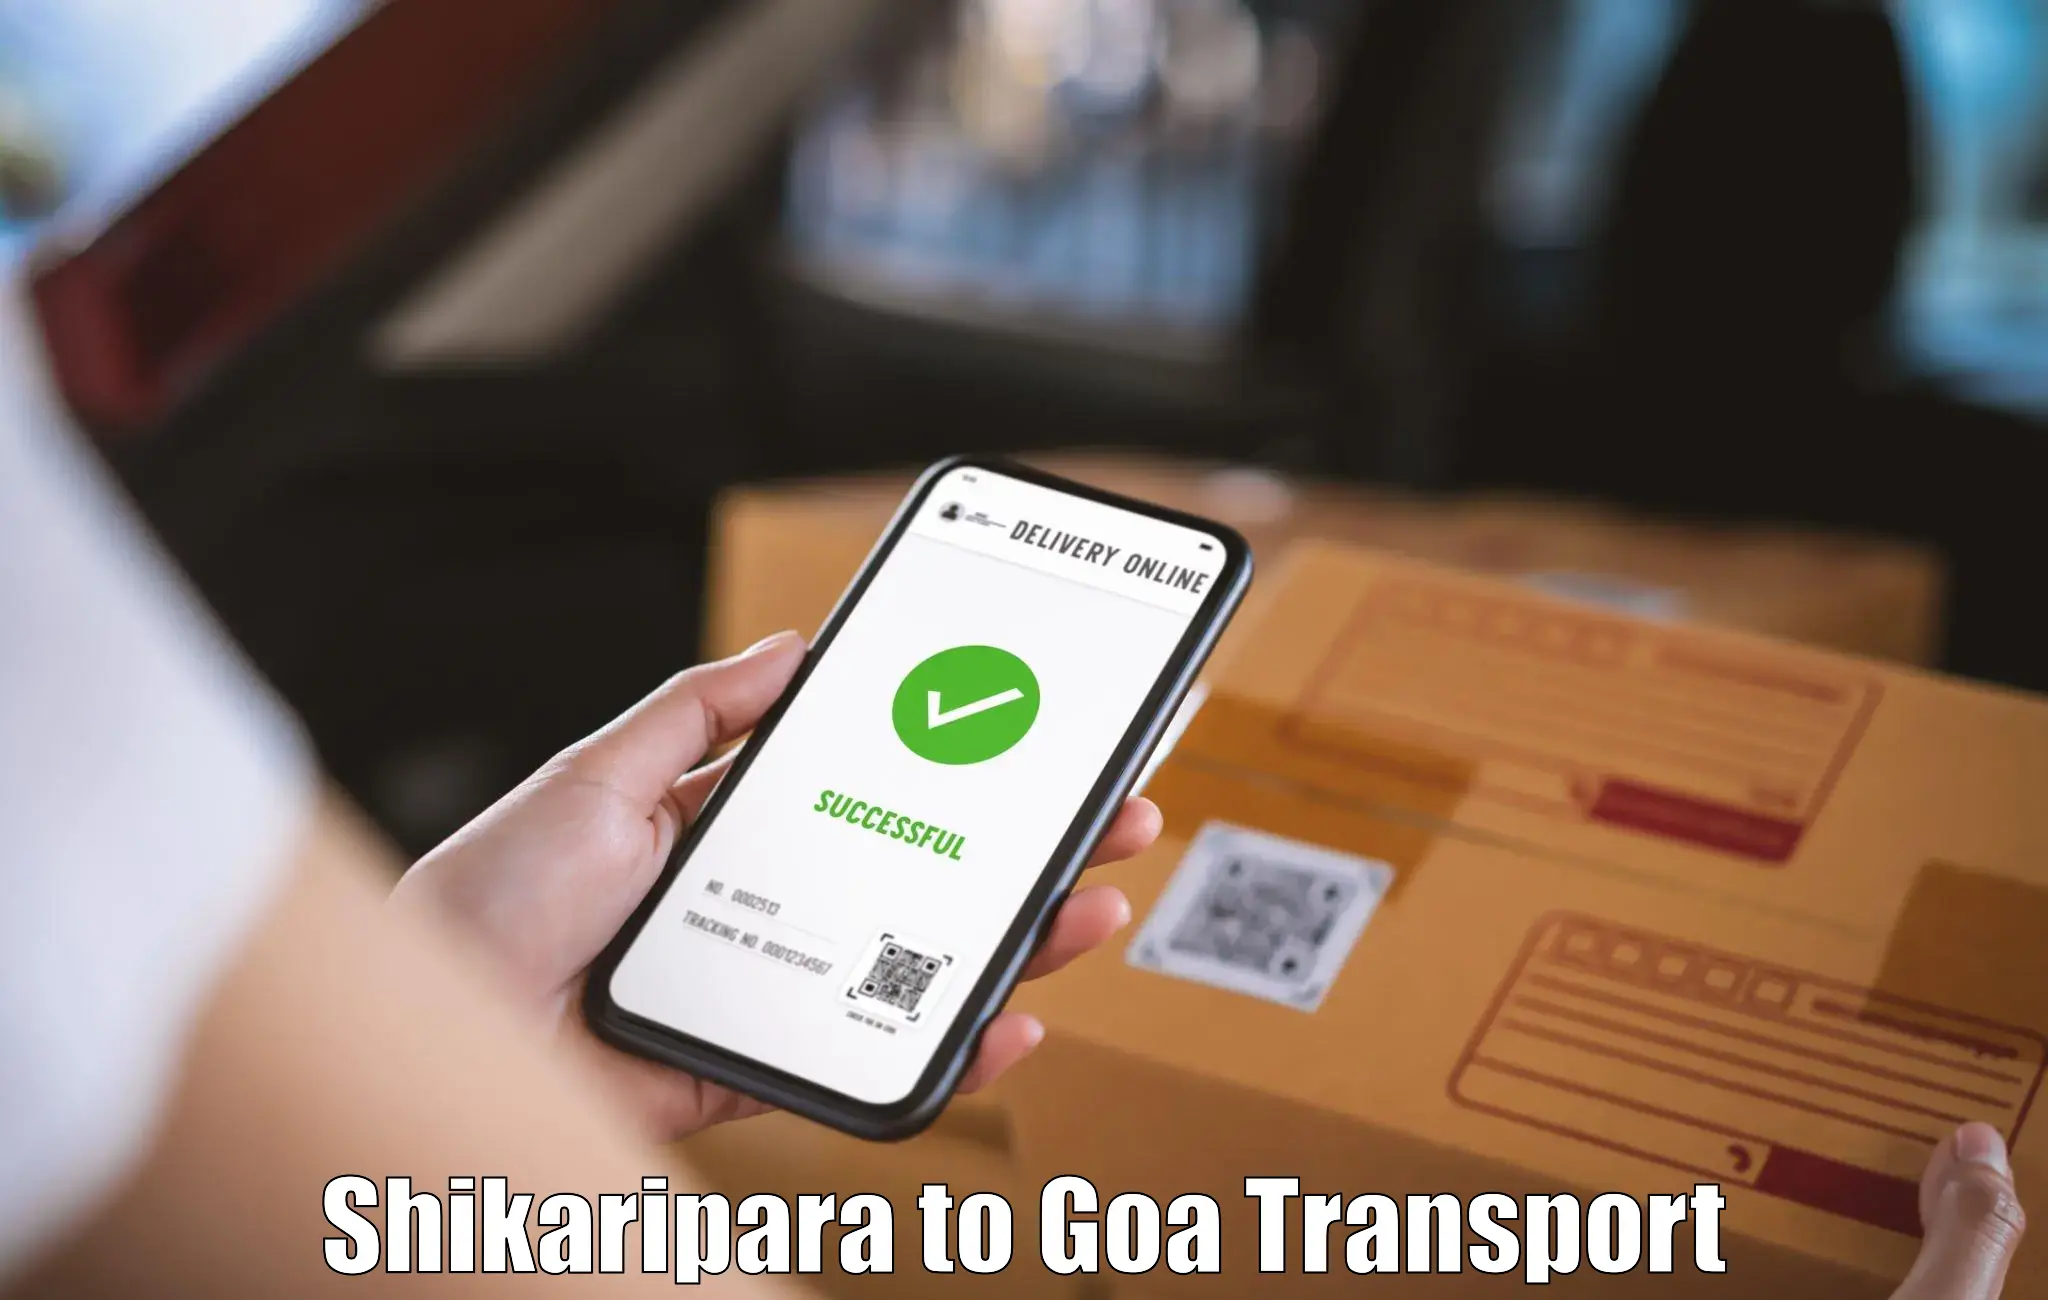 Nearby transport service Shikaripara to South Goa